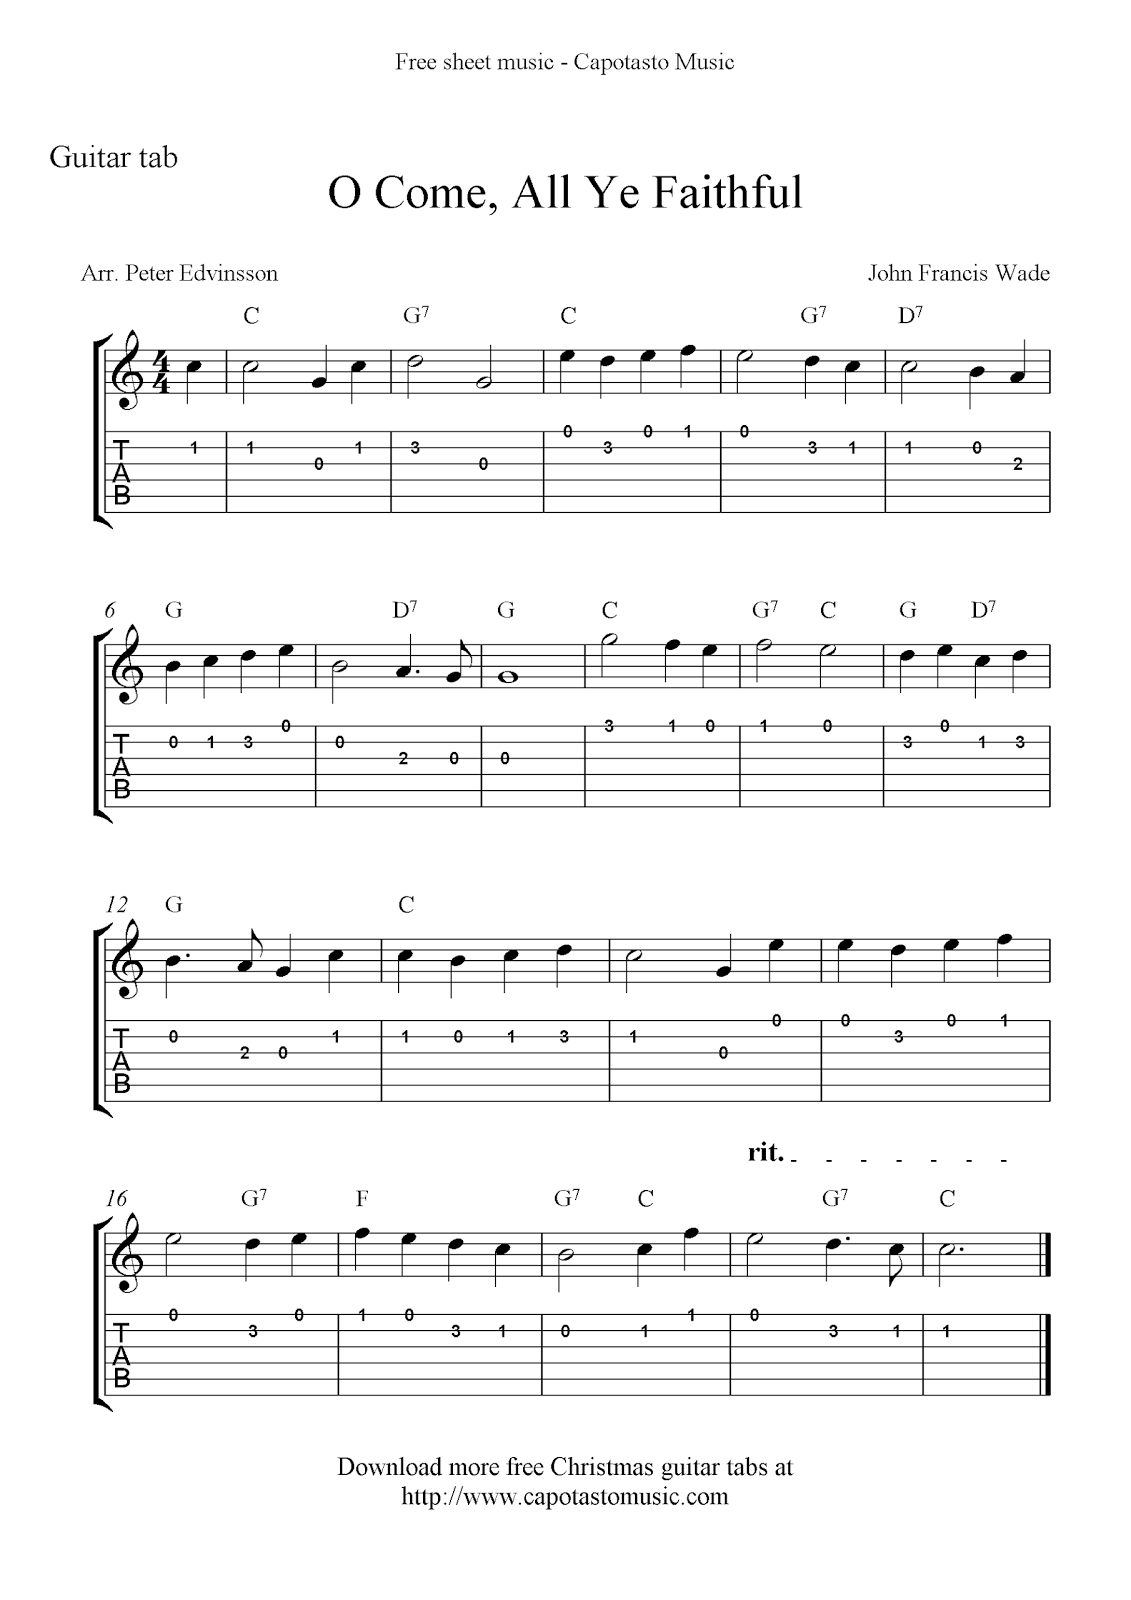 Free Christmas Guitar Tab Sheet Music - free christmas vocal sheet music gaudete piano and ...